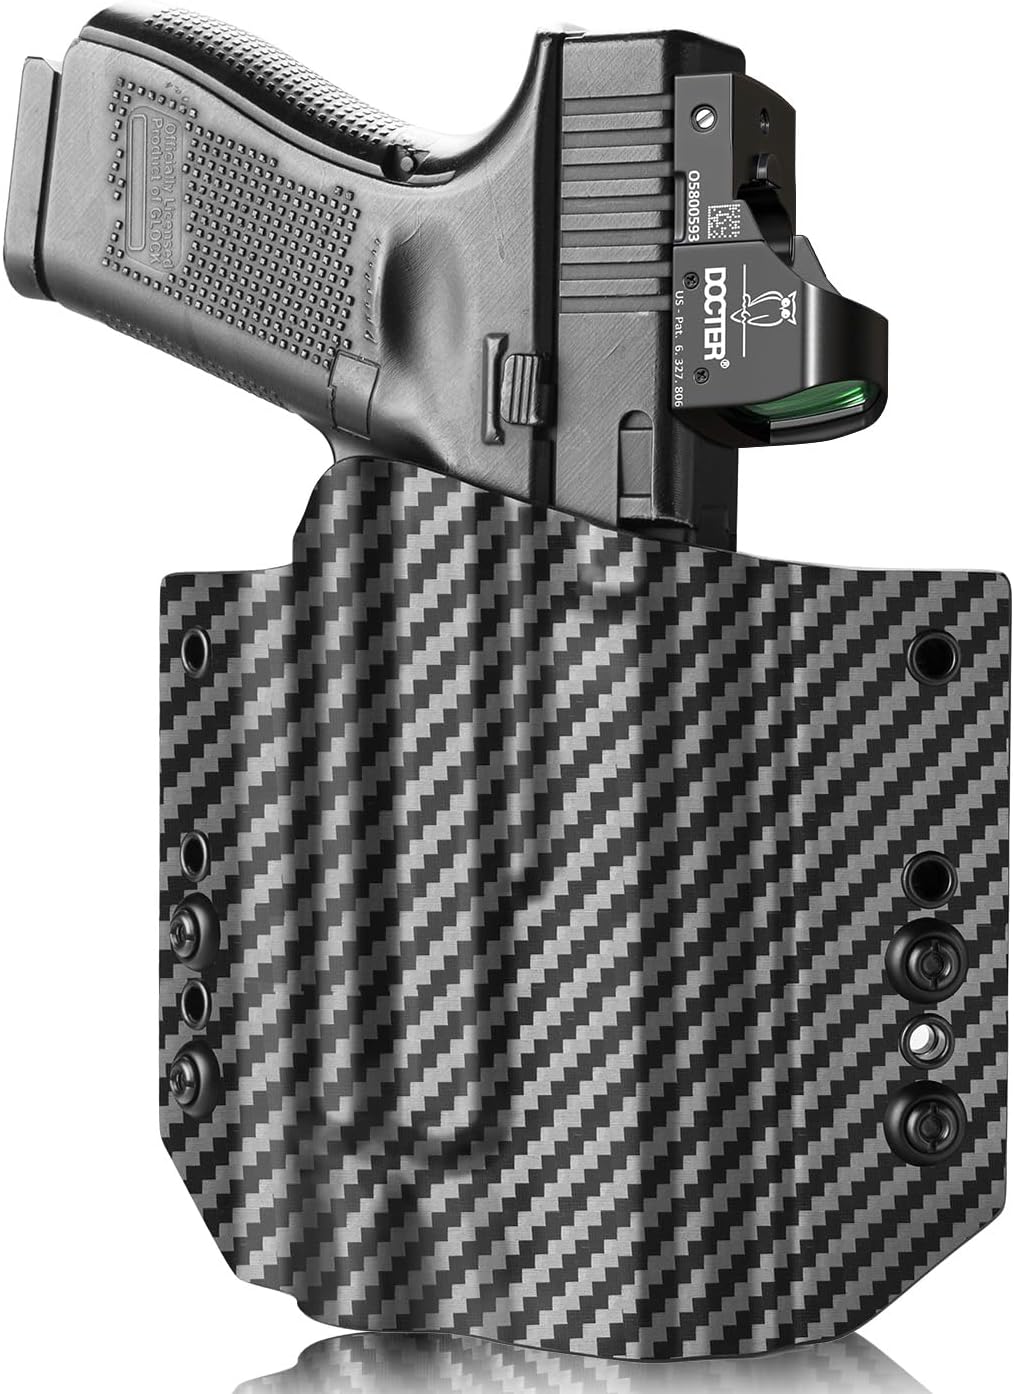 Kydex OWB Light Bearing Holster for Glock 17 19  23 32 Gen 4 5 19X 44 45 with Streamlight TLR 1 1S HL Light, Right Hand